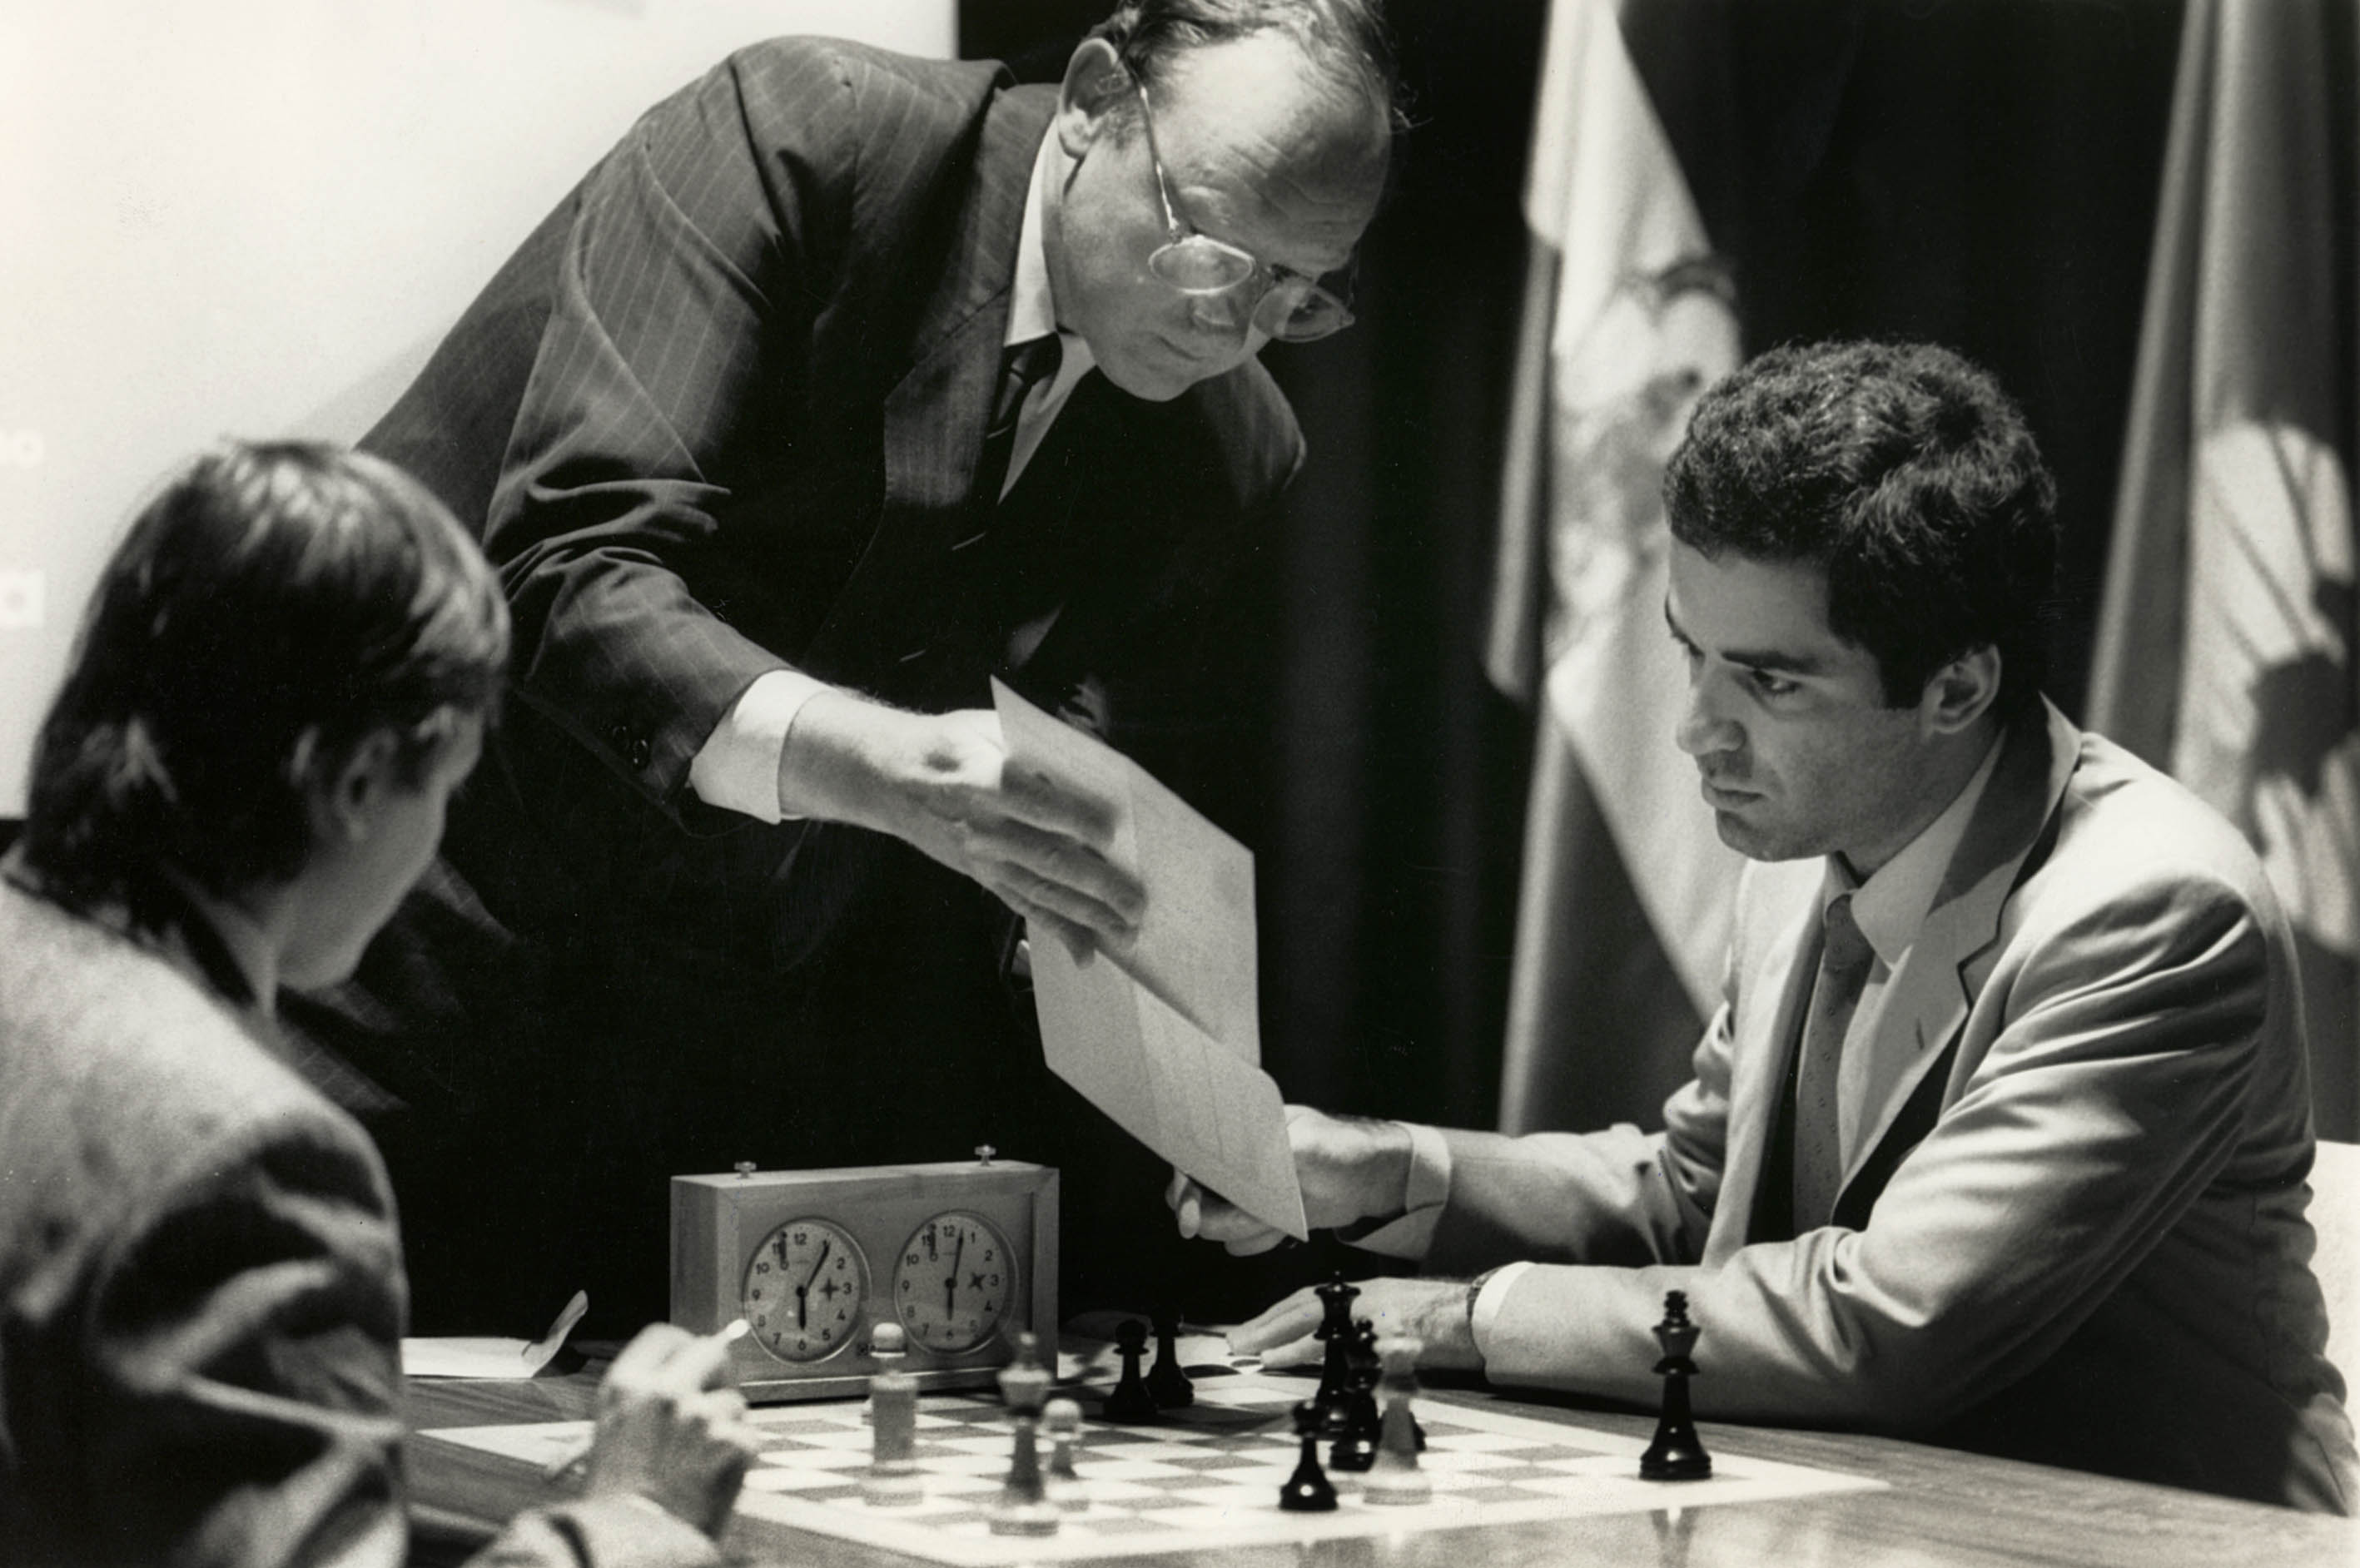 Kasparov - Karpov World Championship Match 1987 - Chessentials